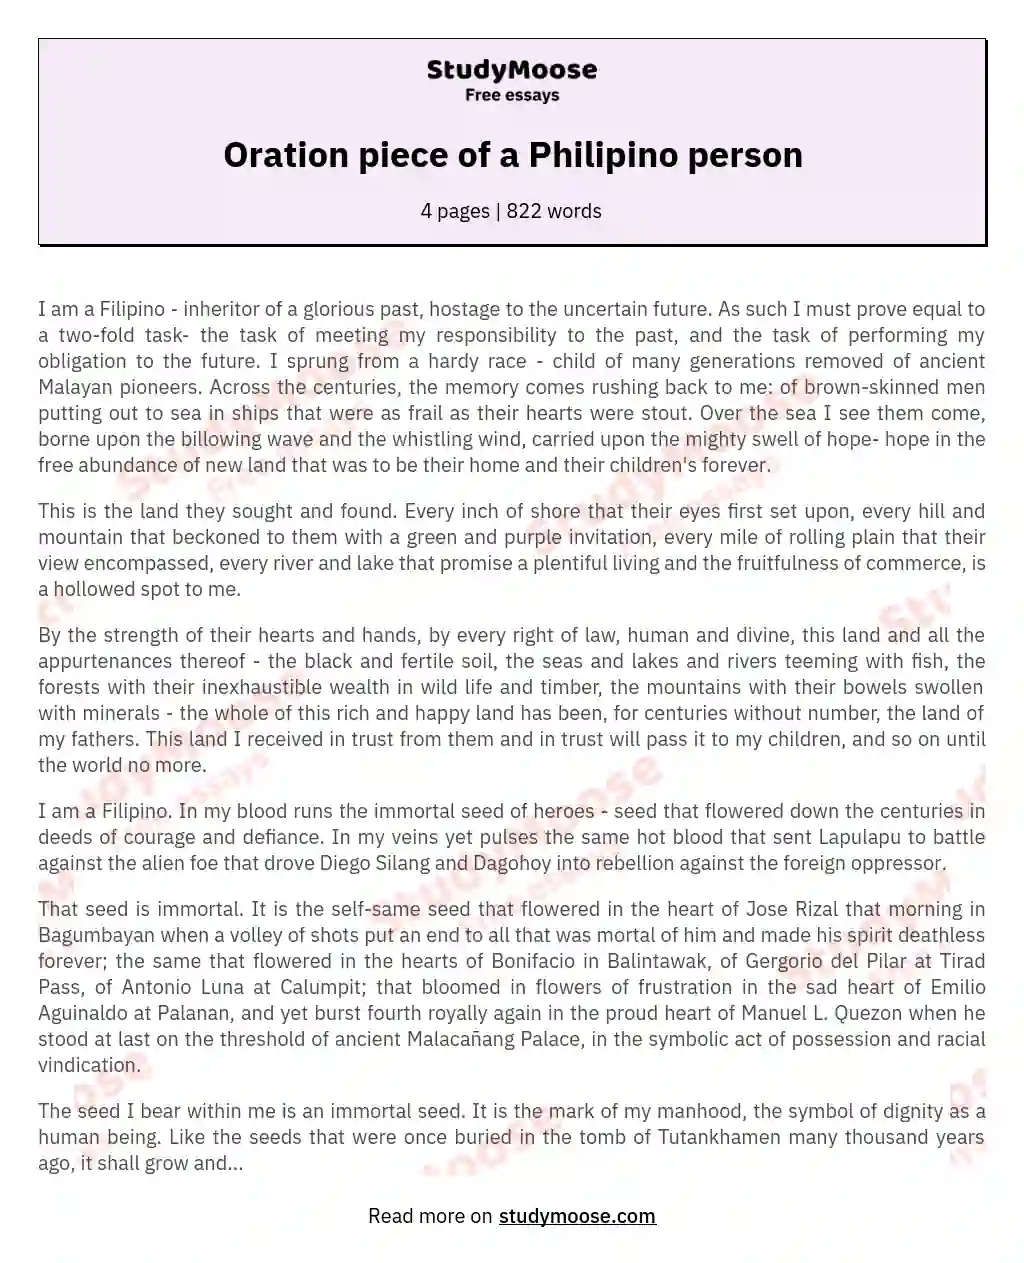 Oration piece of a Philipino person essay